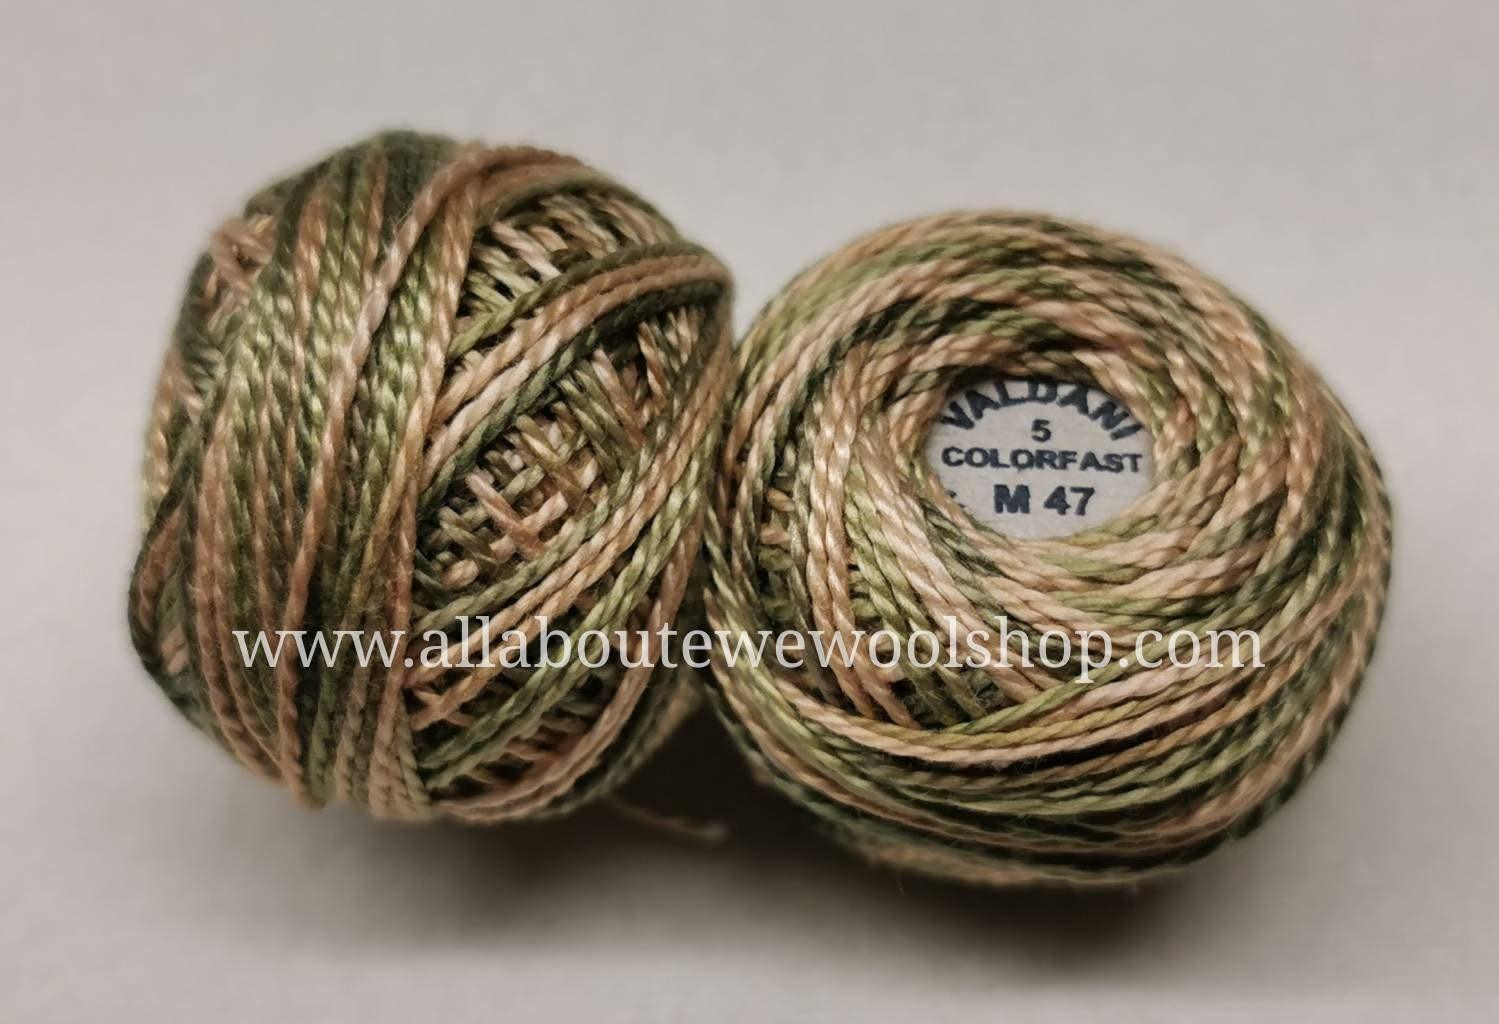 M47 #5 Valdani Pearl/Perle Cotton Thread - All About Ewe Wool Shop